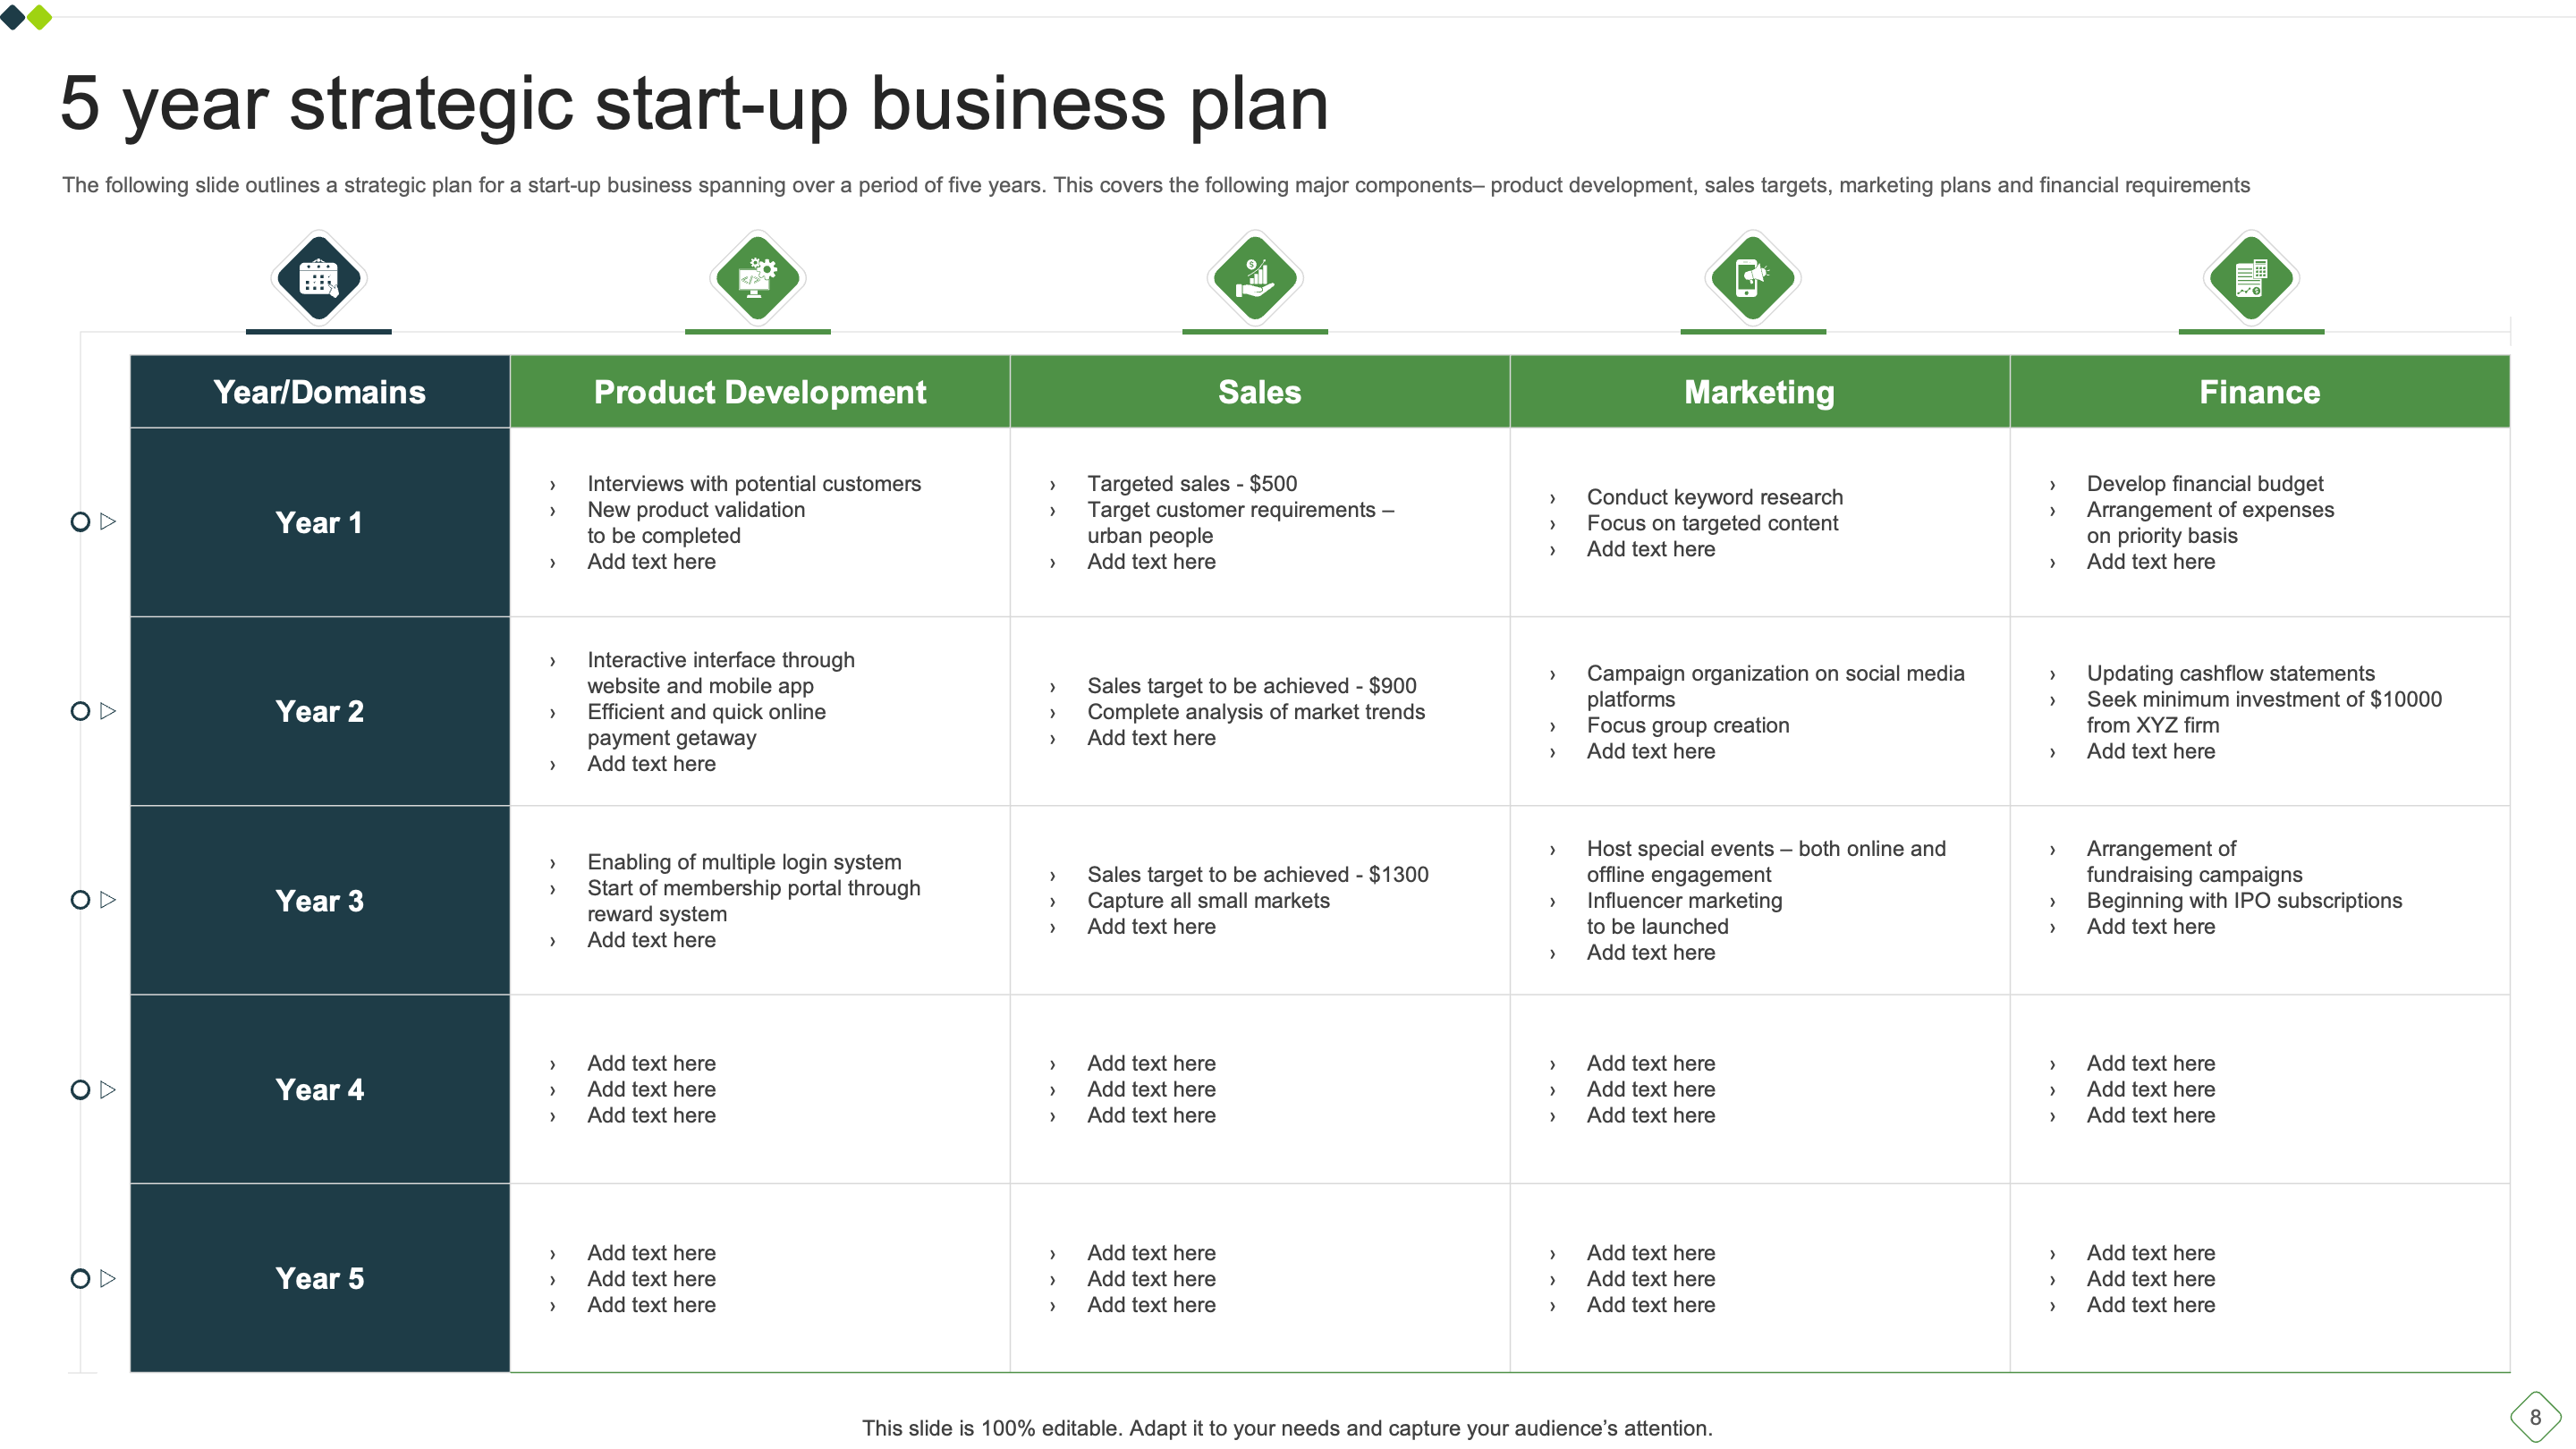 5 Year Strategic Start-Up Business Plan